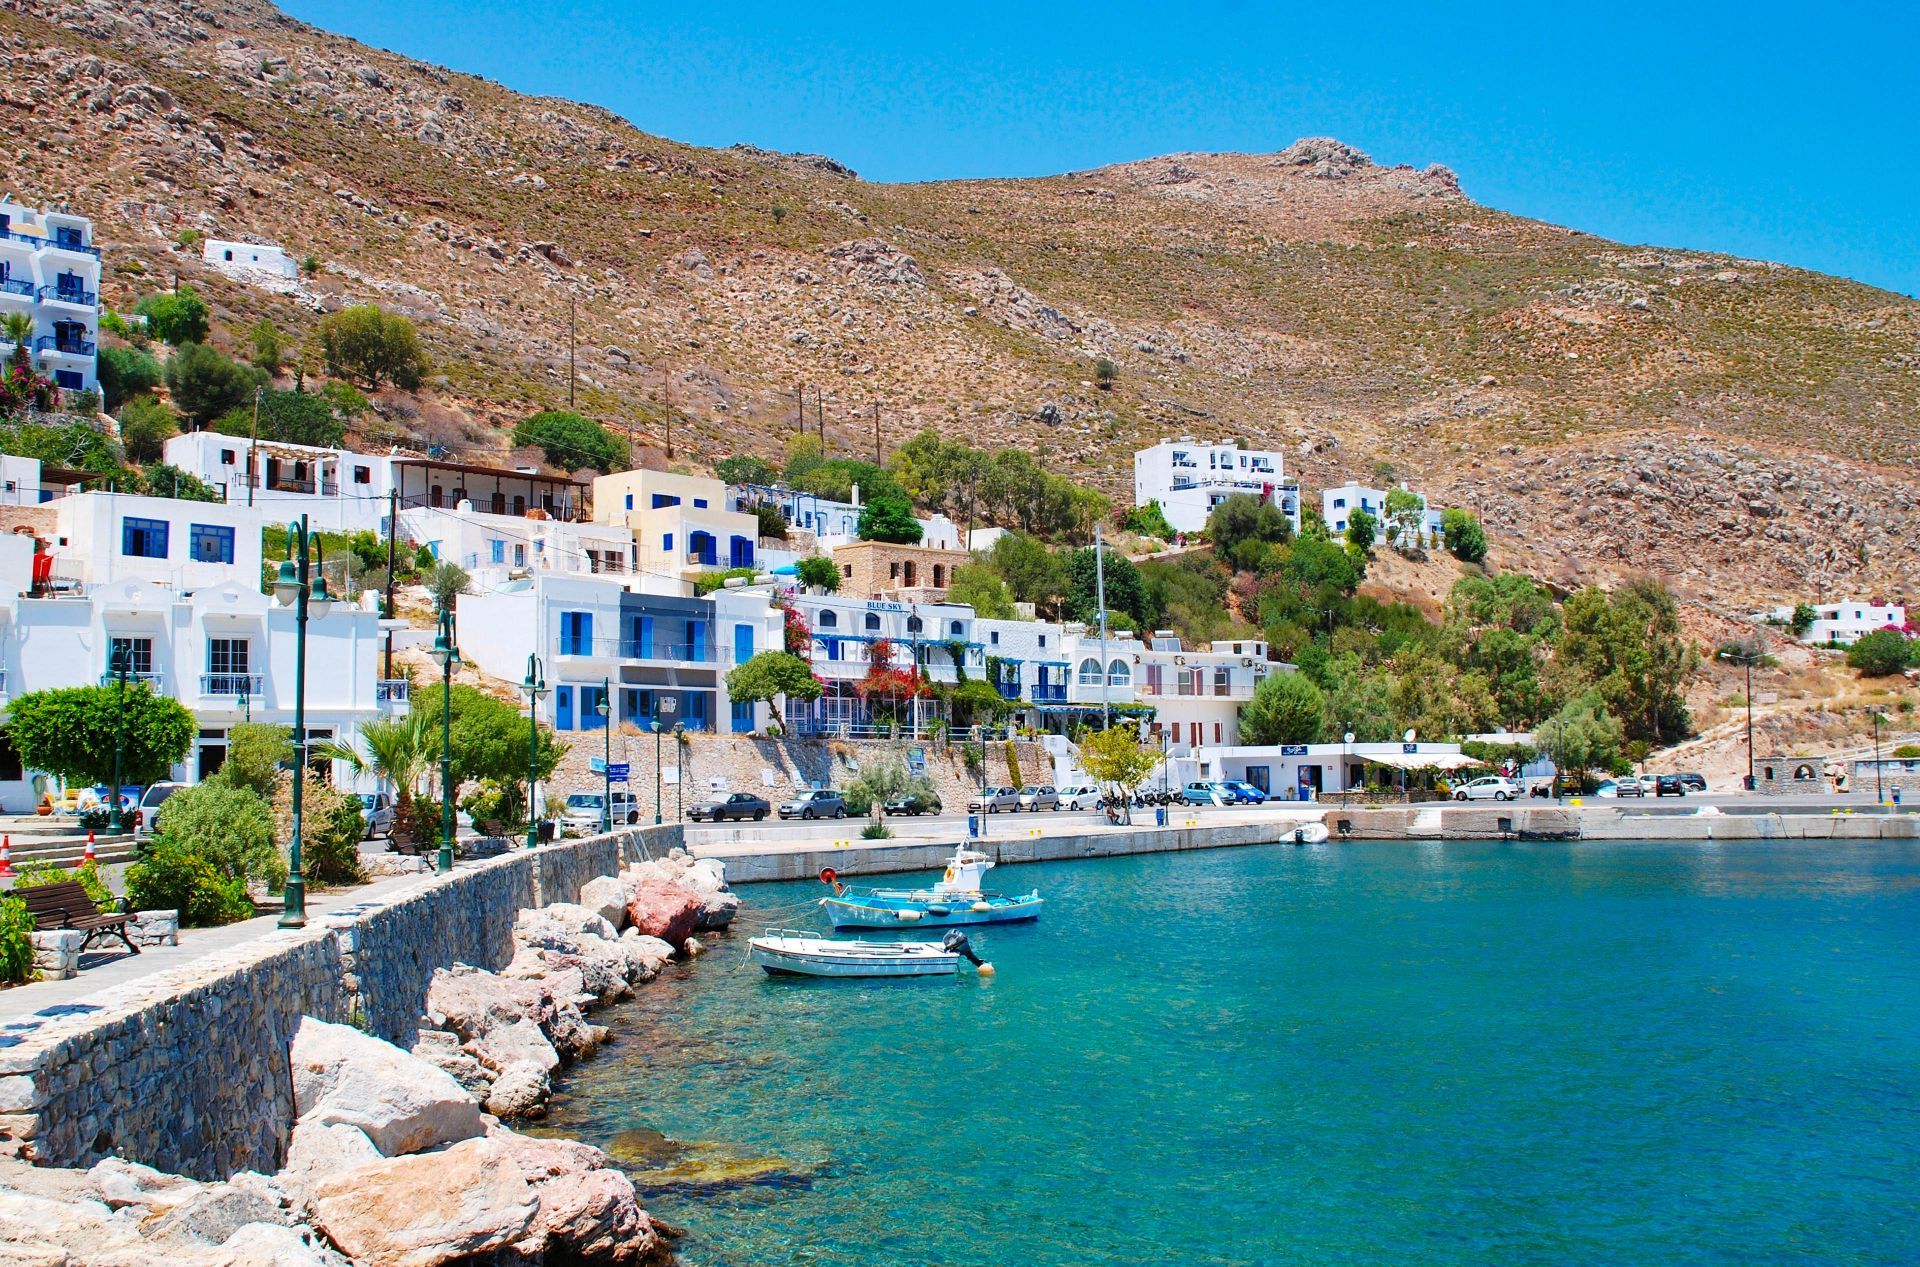 Tilos Greece: Livadia, the port of the island